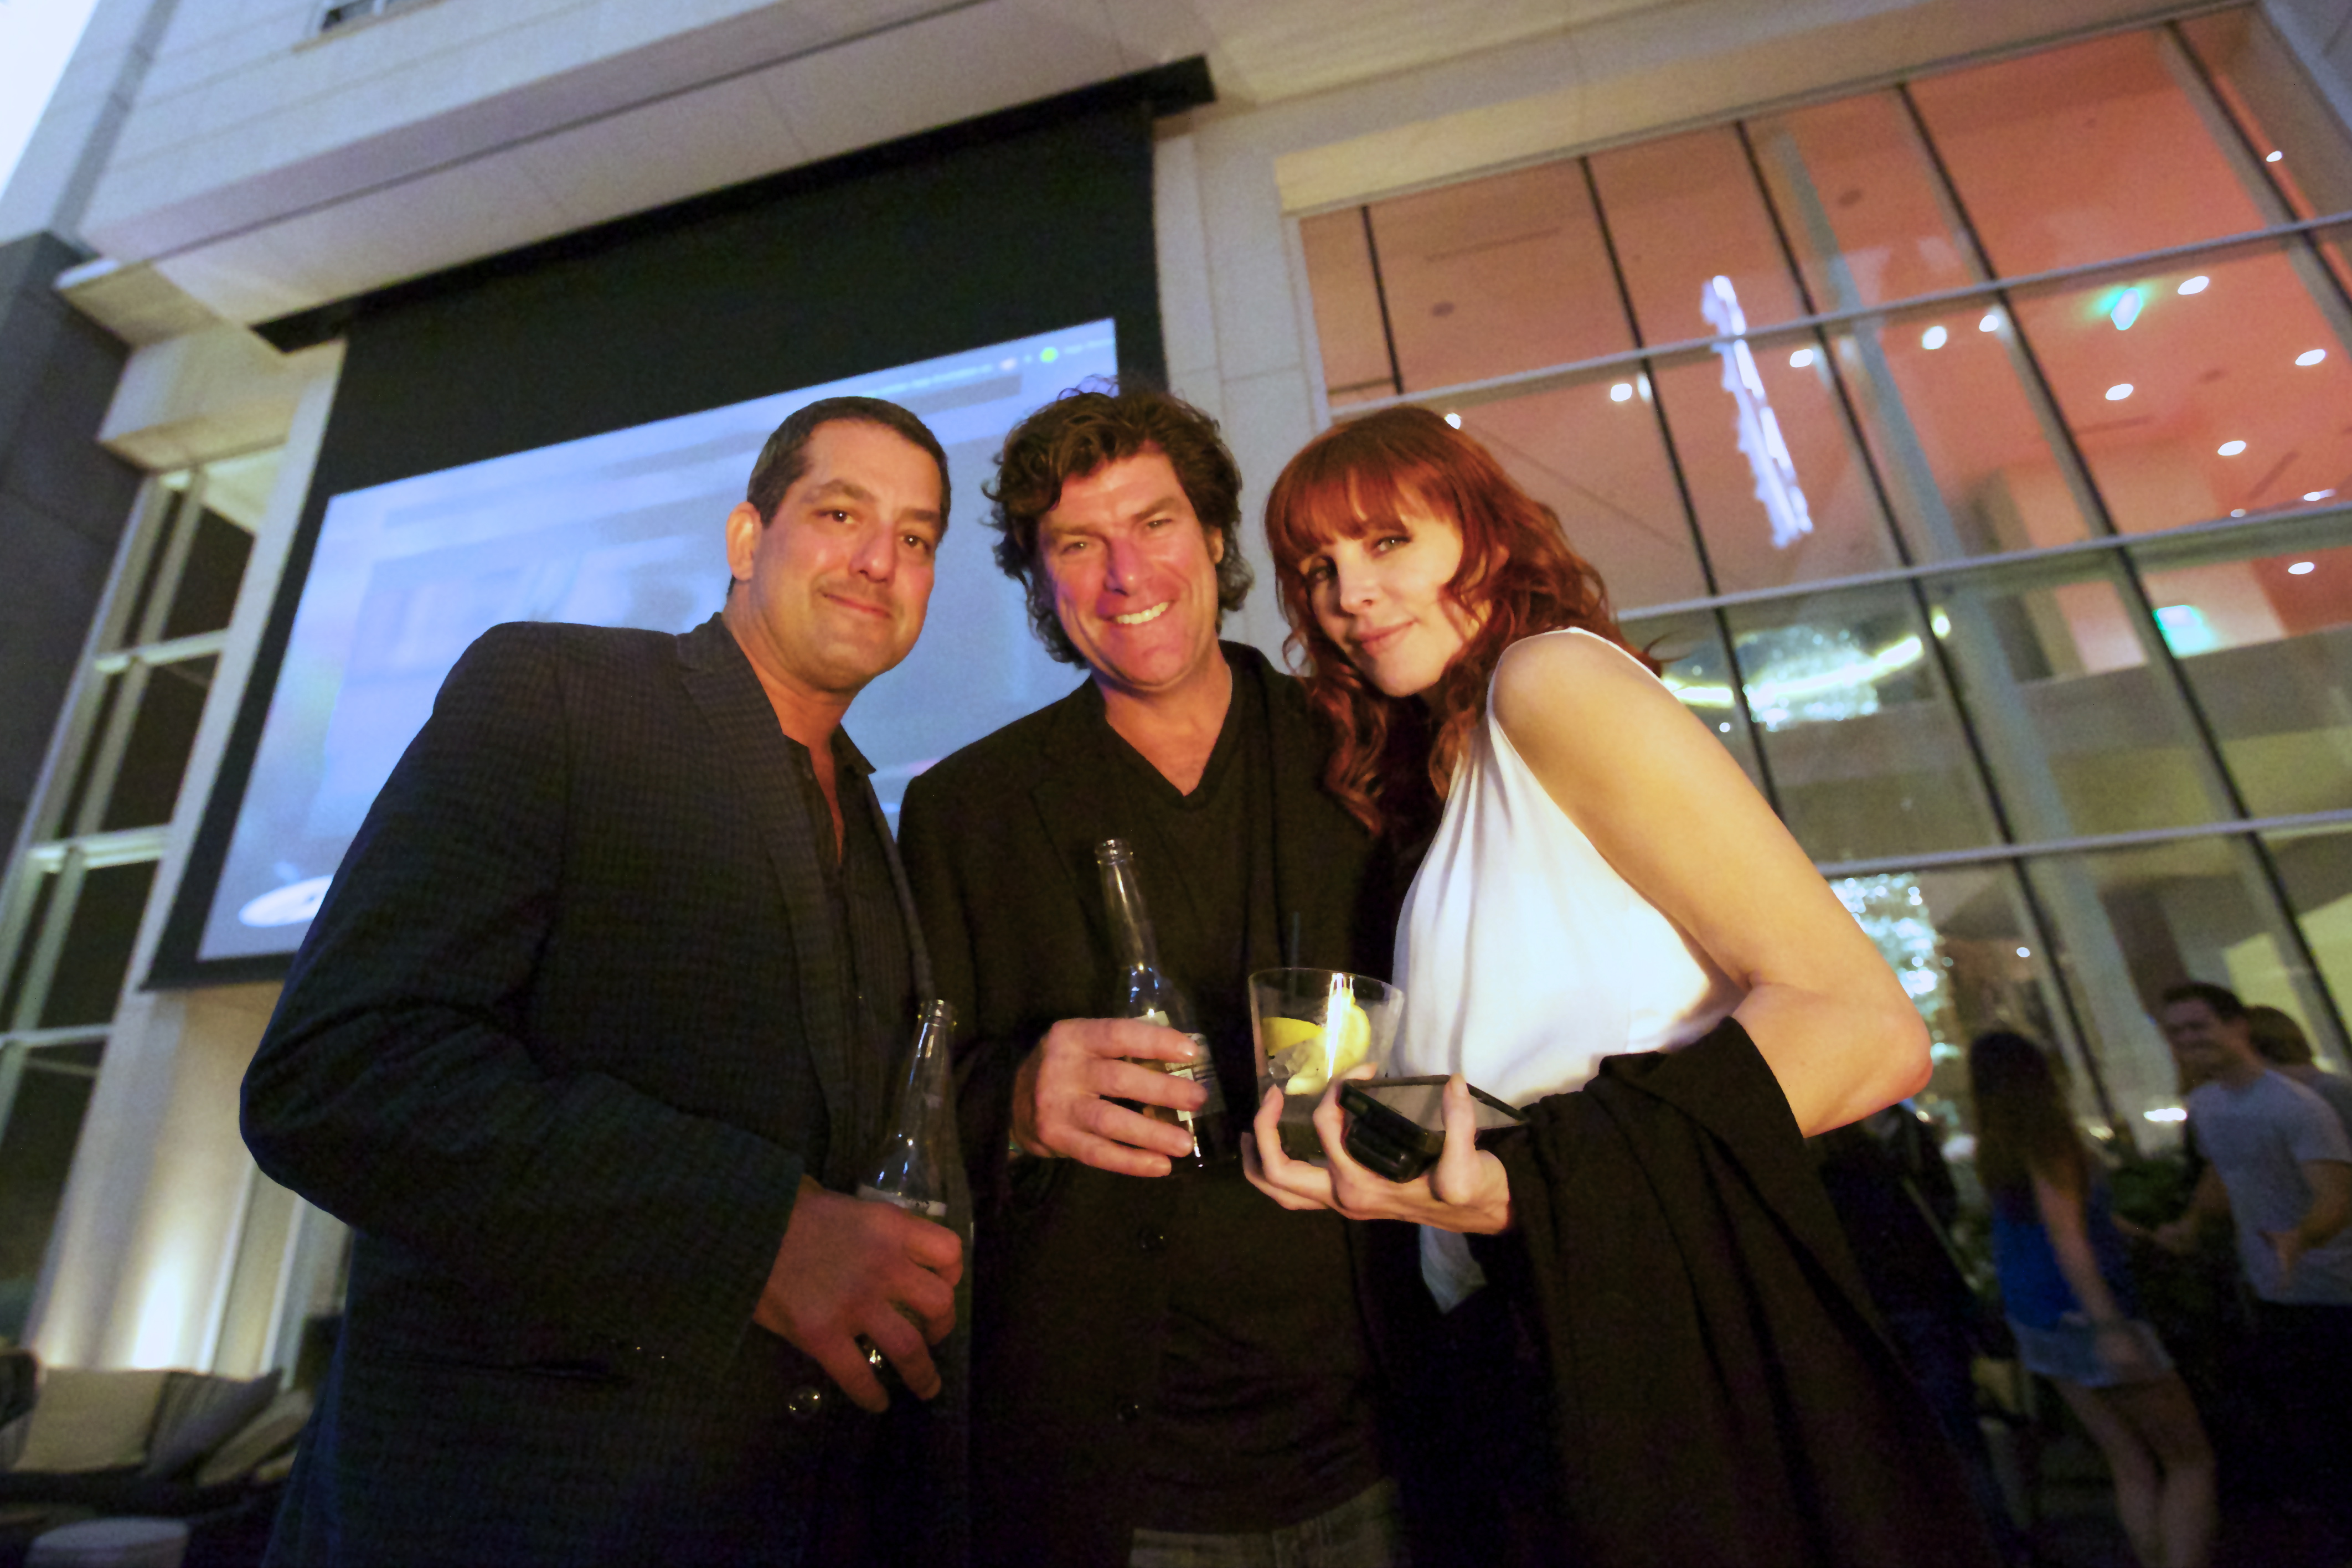 With Director Matt Birman and 'a fish story' star Jayne Heitmeyer @ W hotel in LA